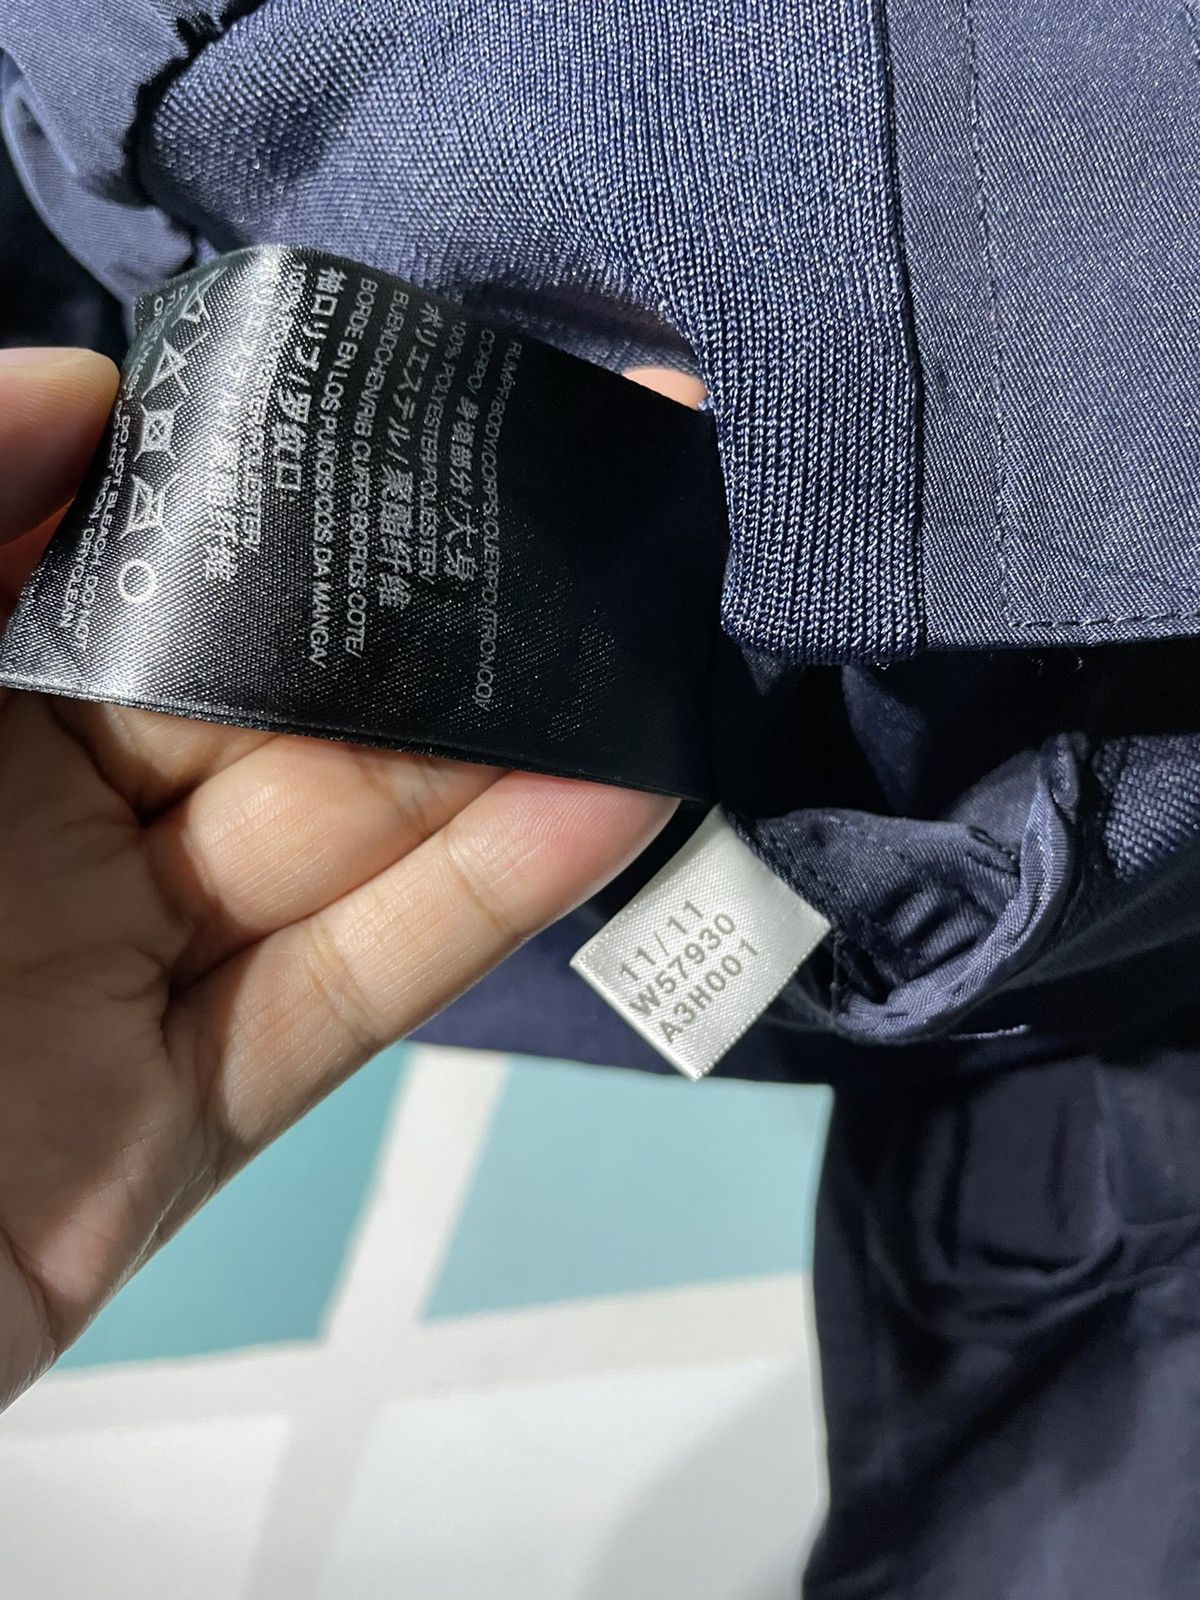 DELETE IN 24h‼️ Adidas Y-3 cropped jacket - 5